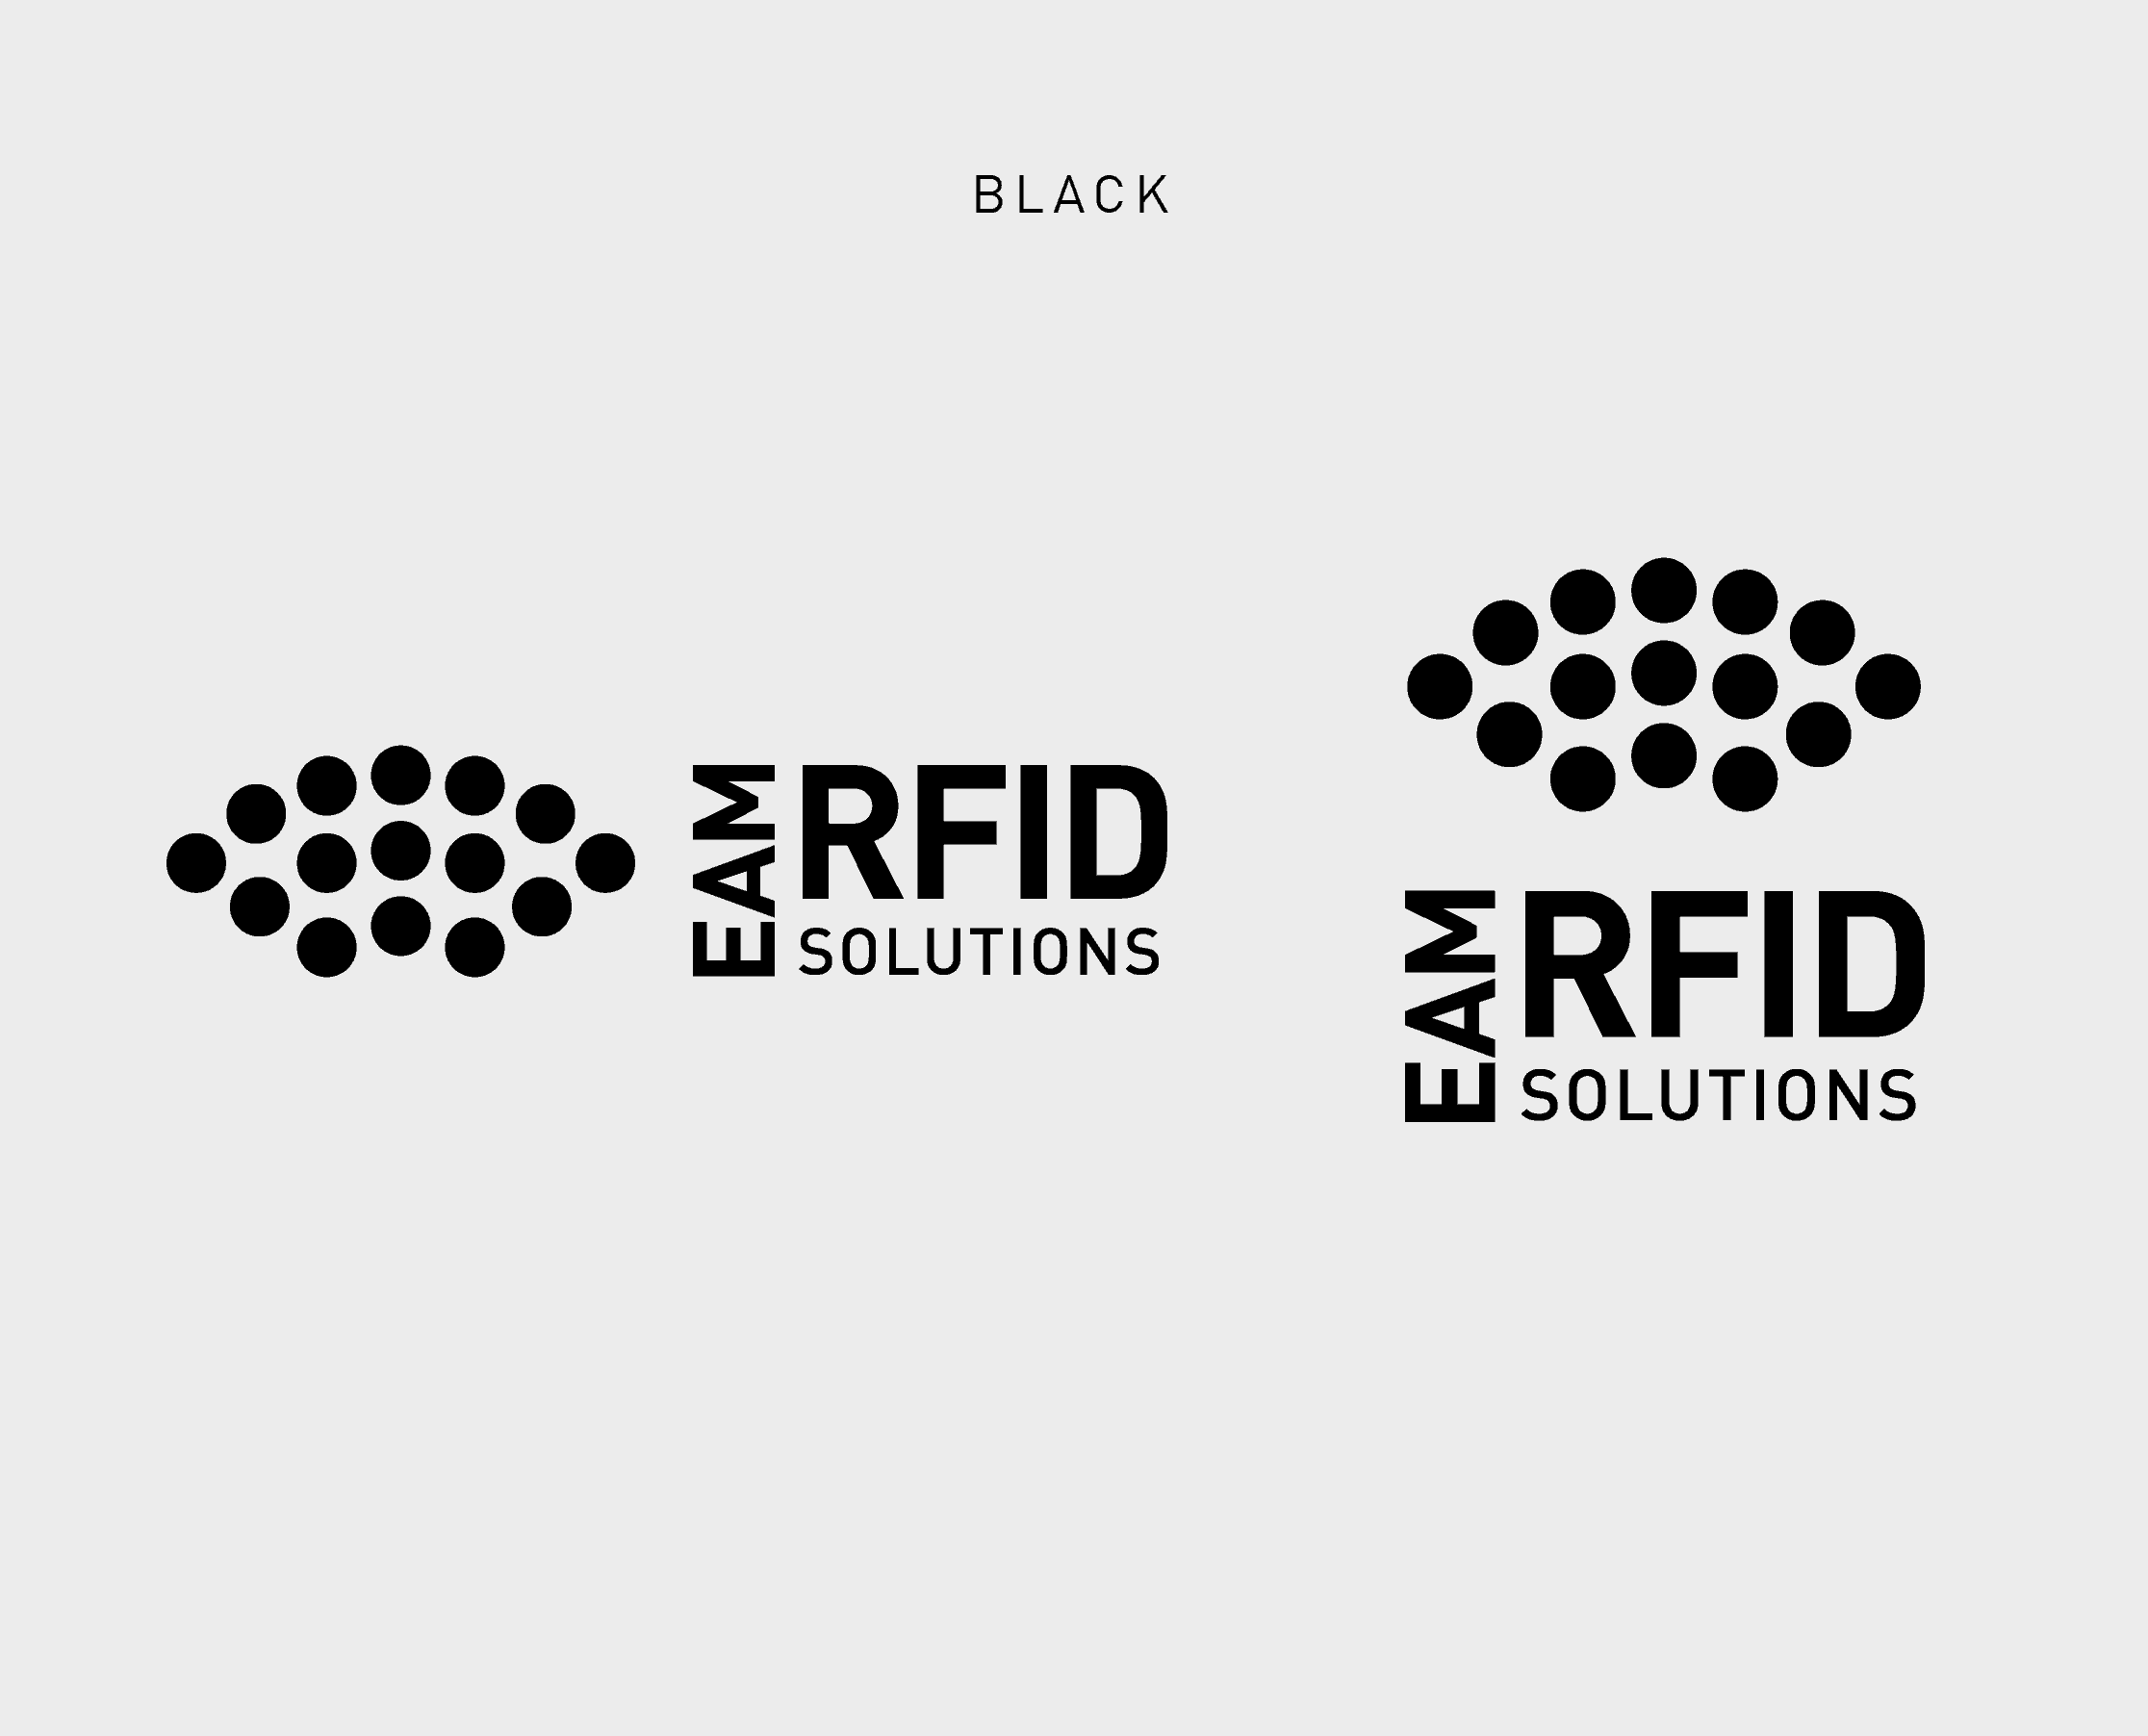 EAM RFID dark logo usage on light grey background